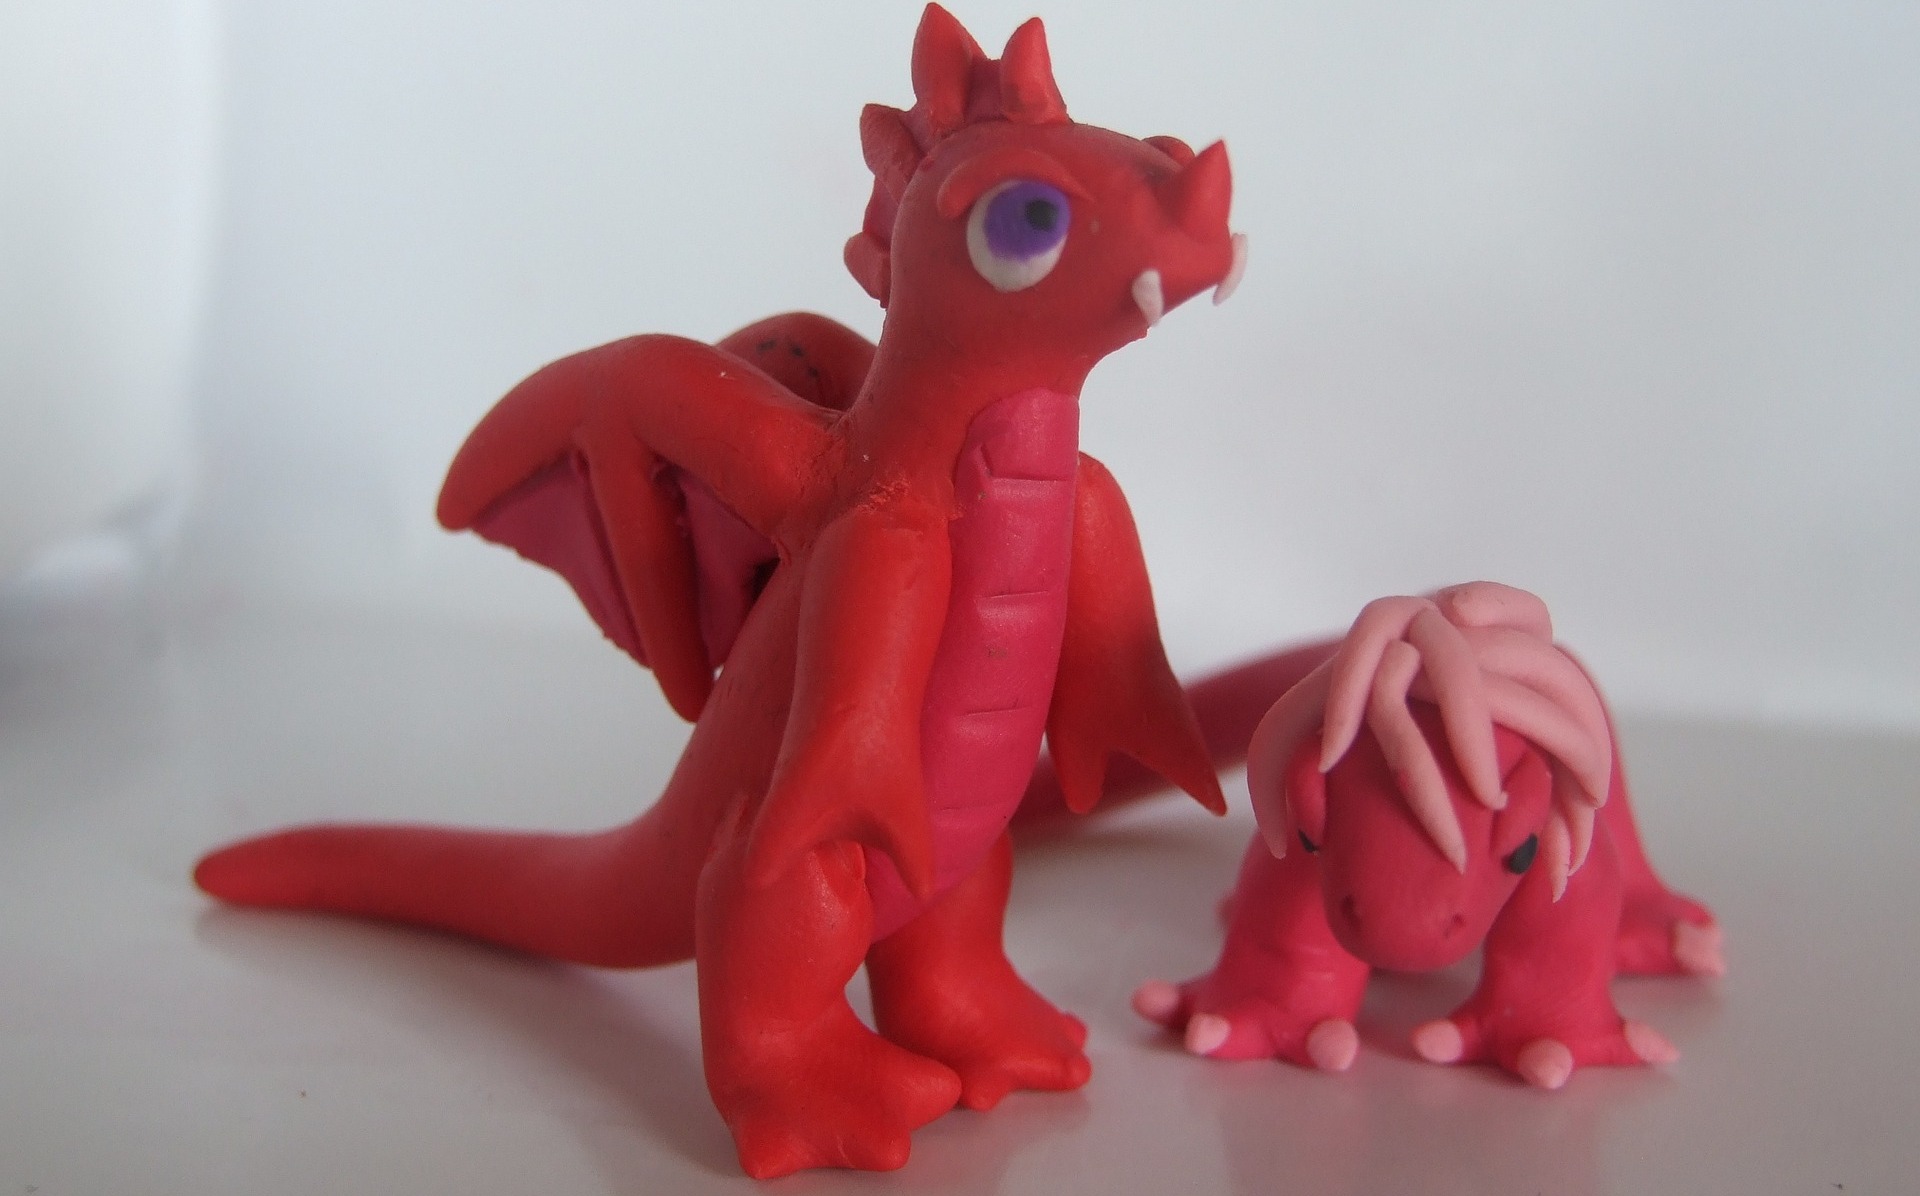 Air dried or polymer clay dragon